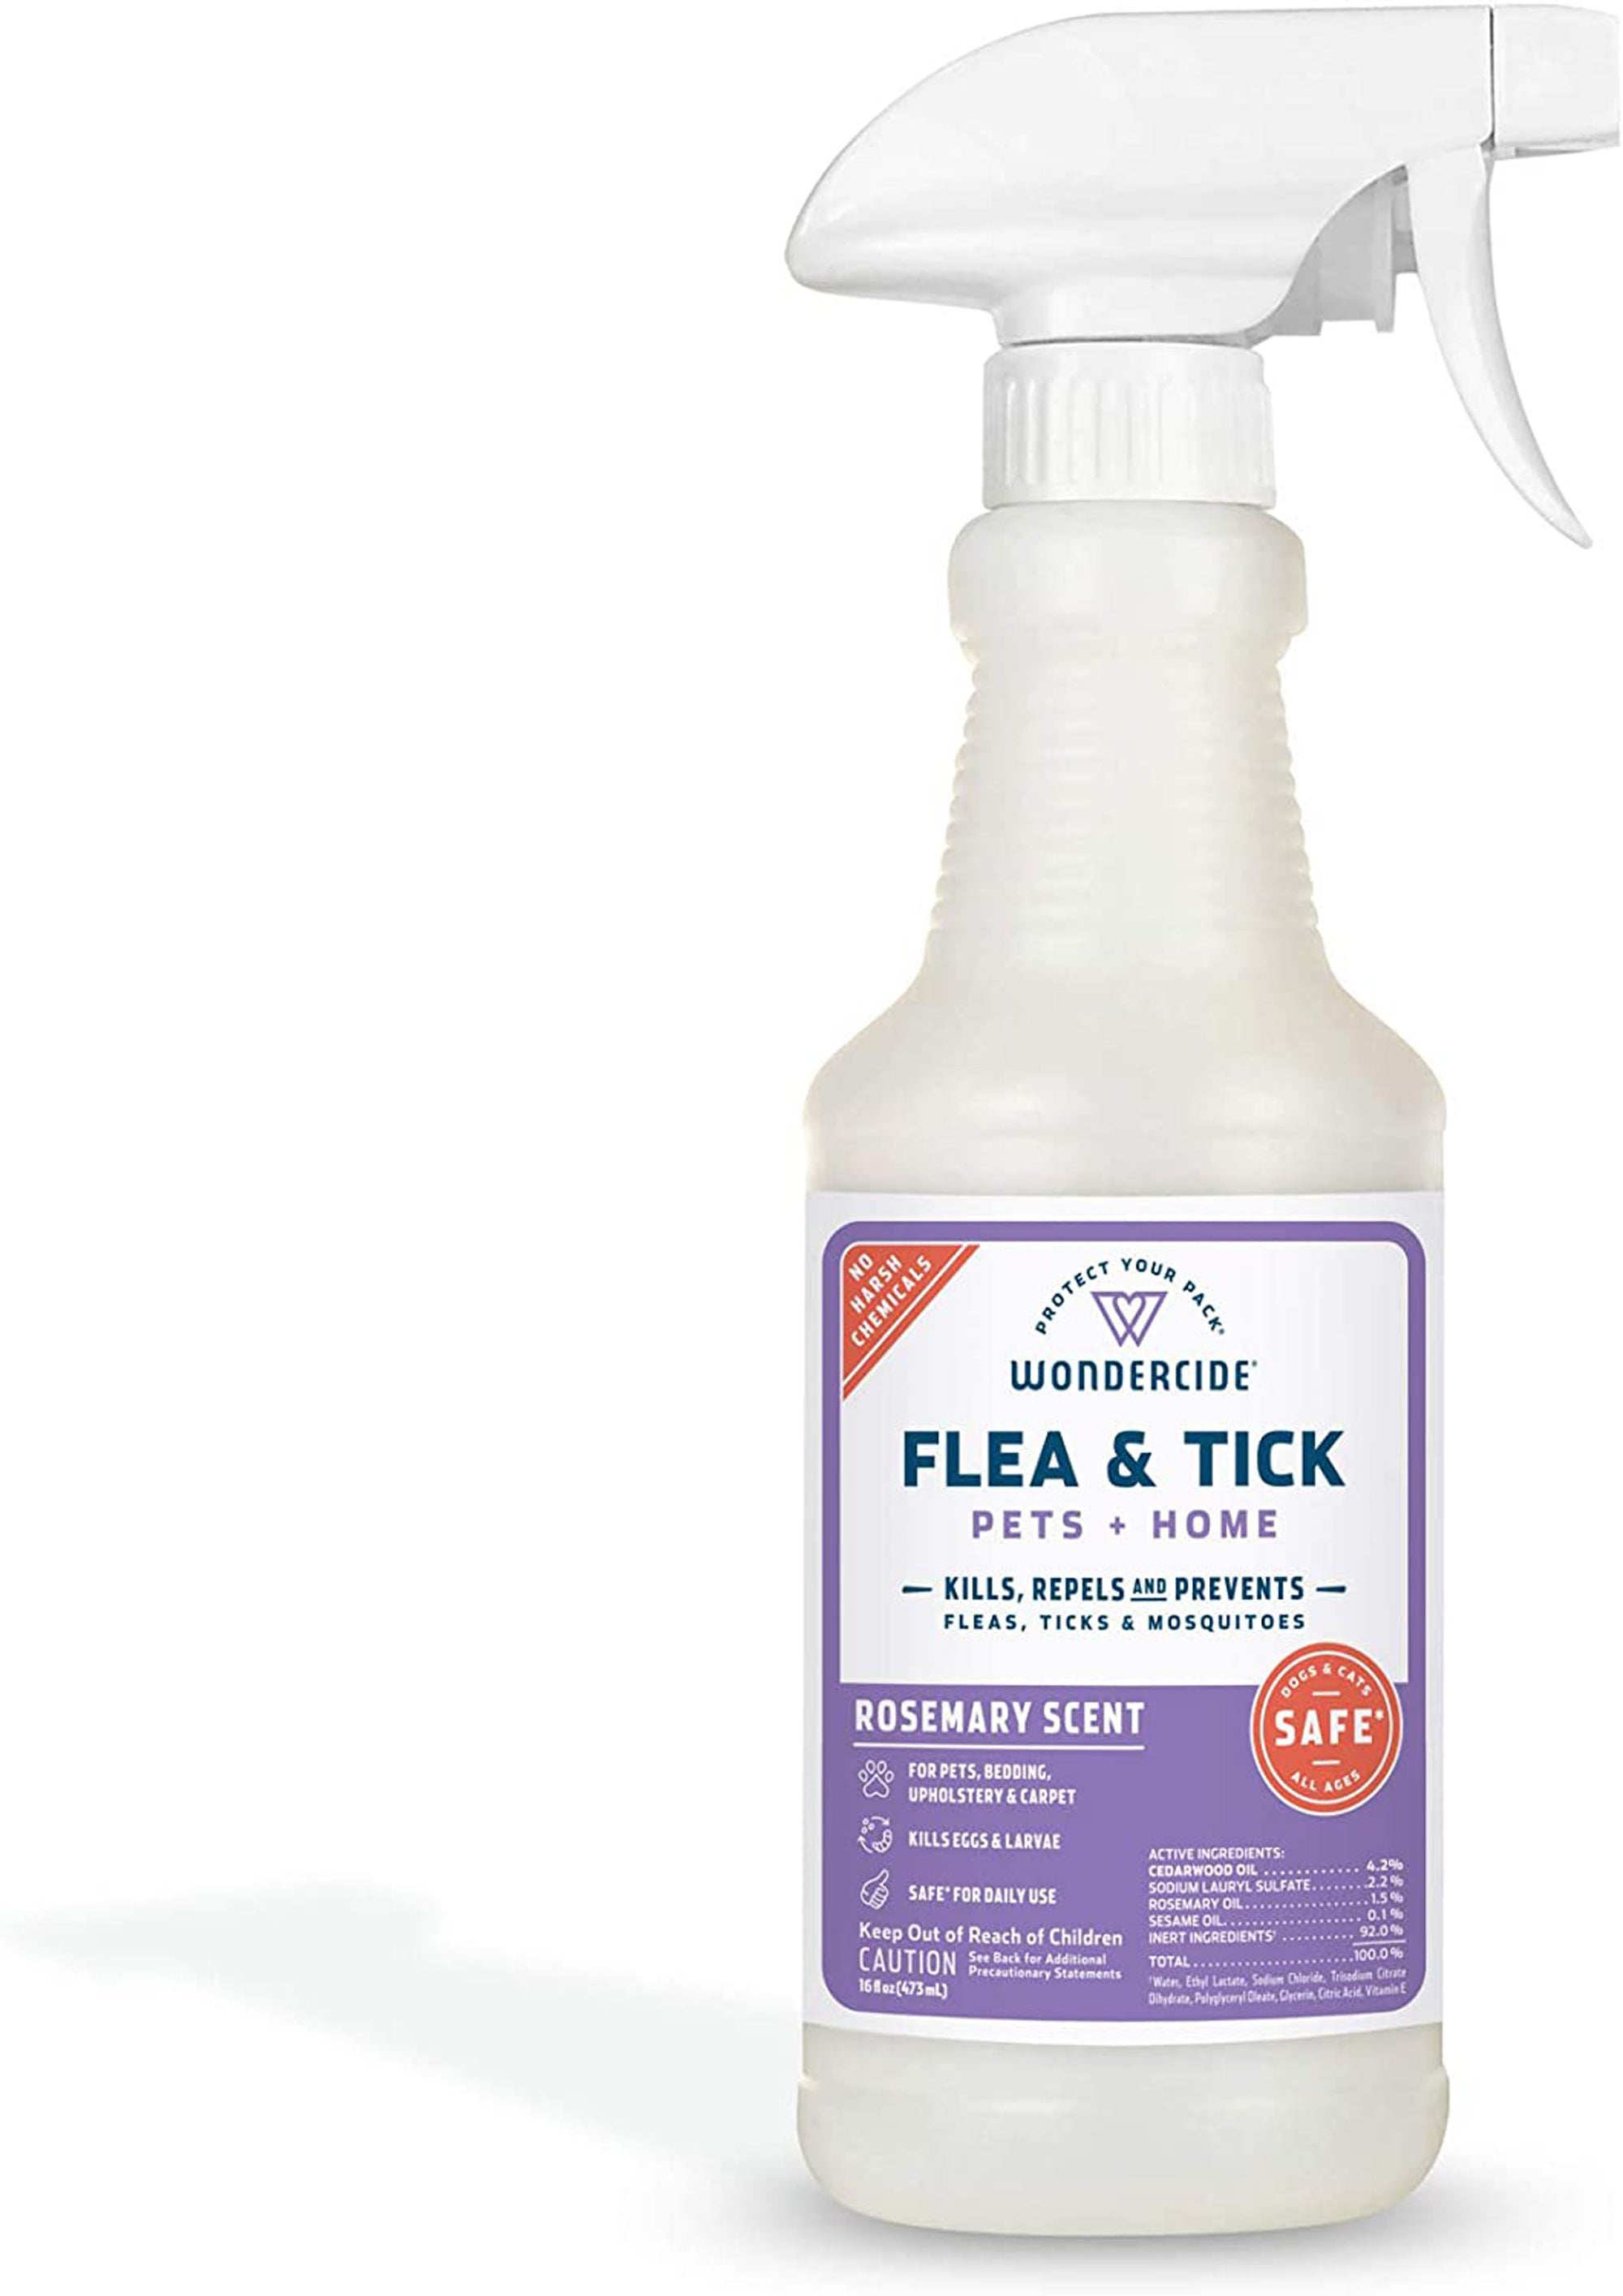 Wondercide Flea Tick And Mosquito Control Spray 16 oz.-Rosemary